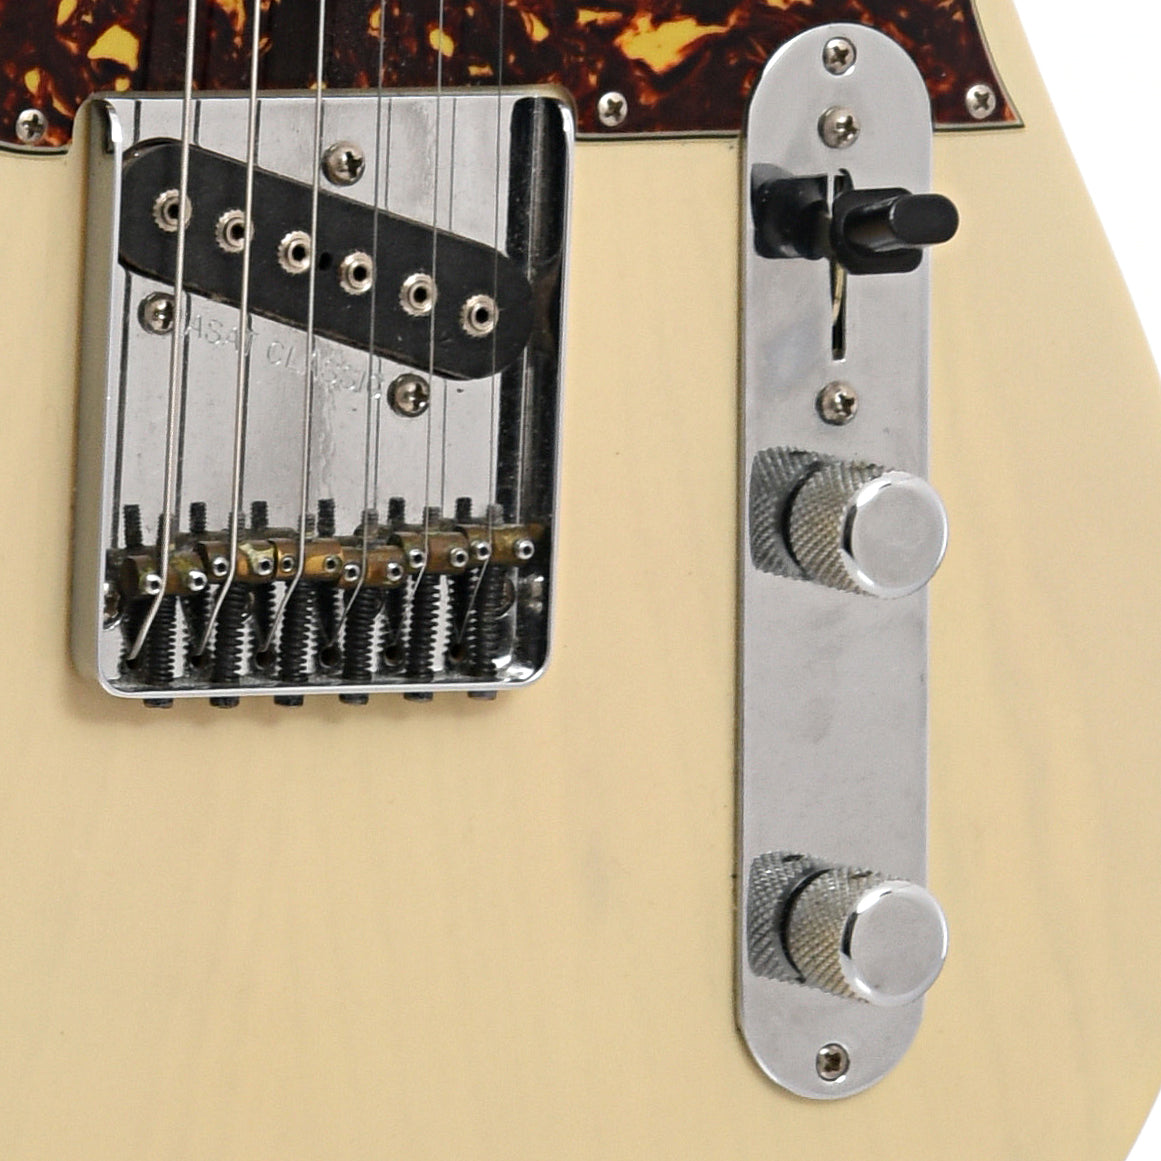 Bridge and controls for G&L Asat Classic Electric Guitar